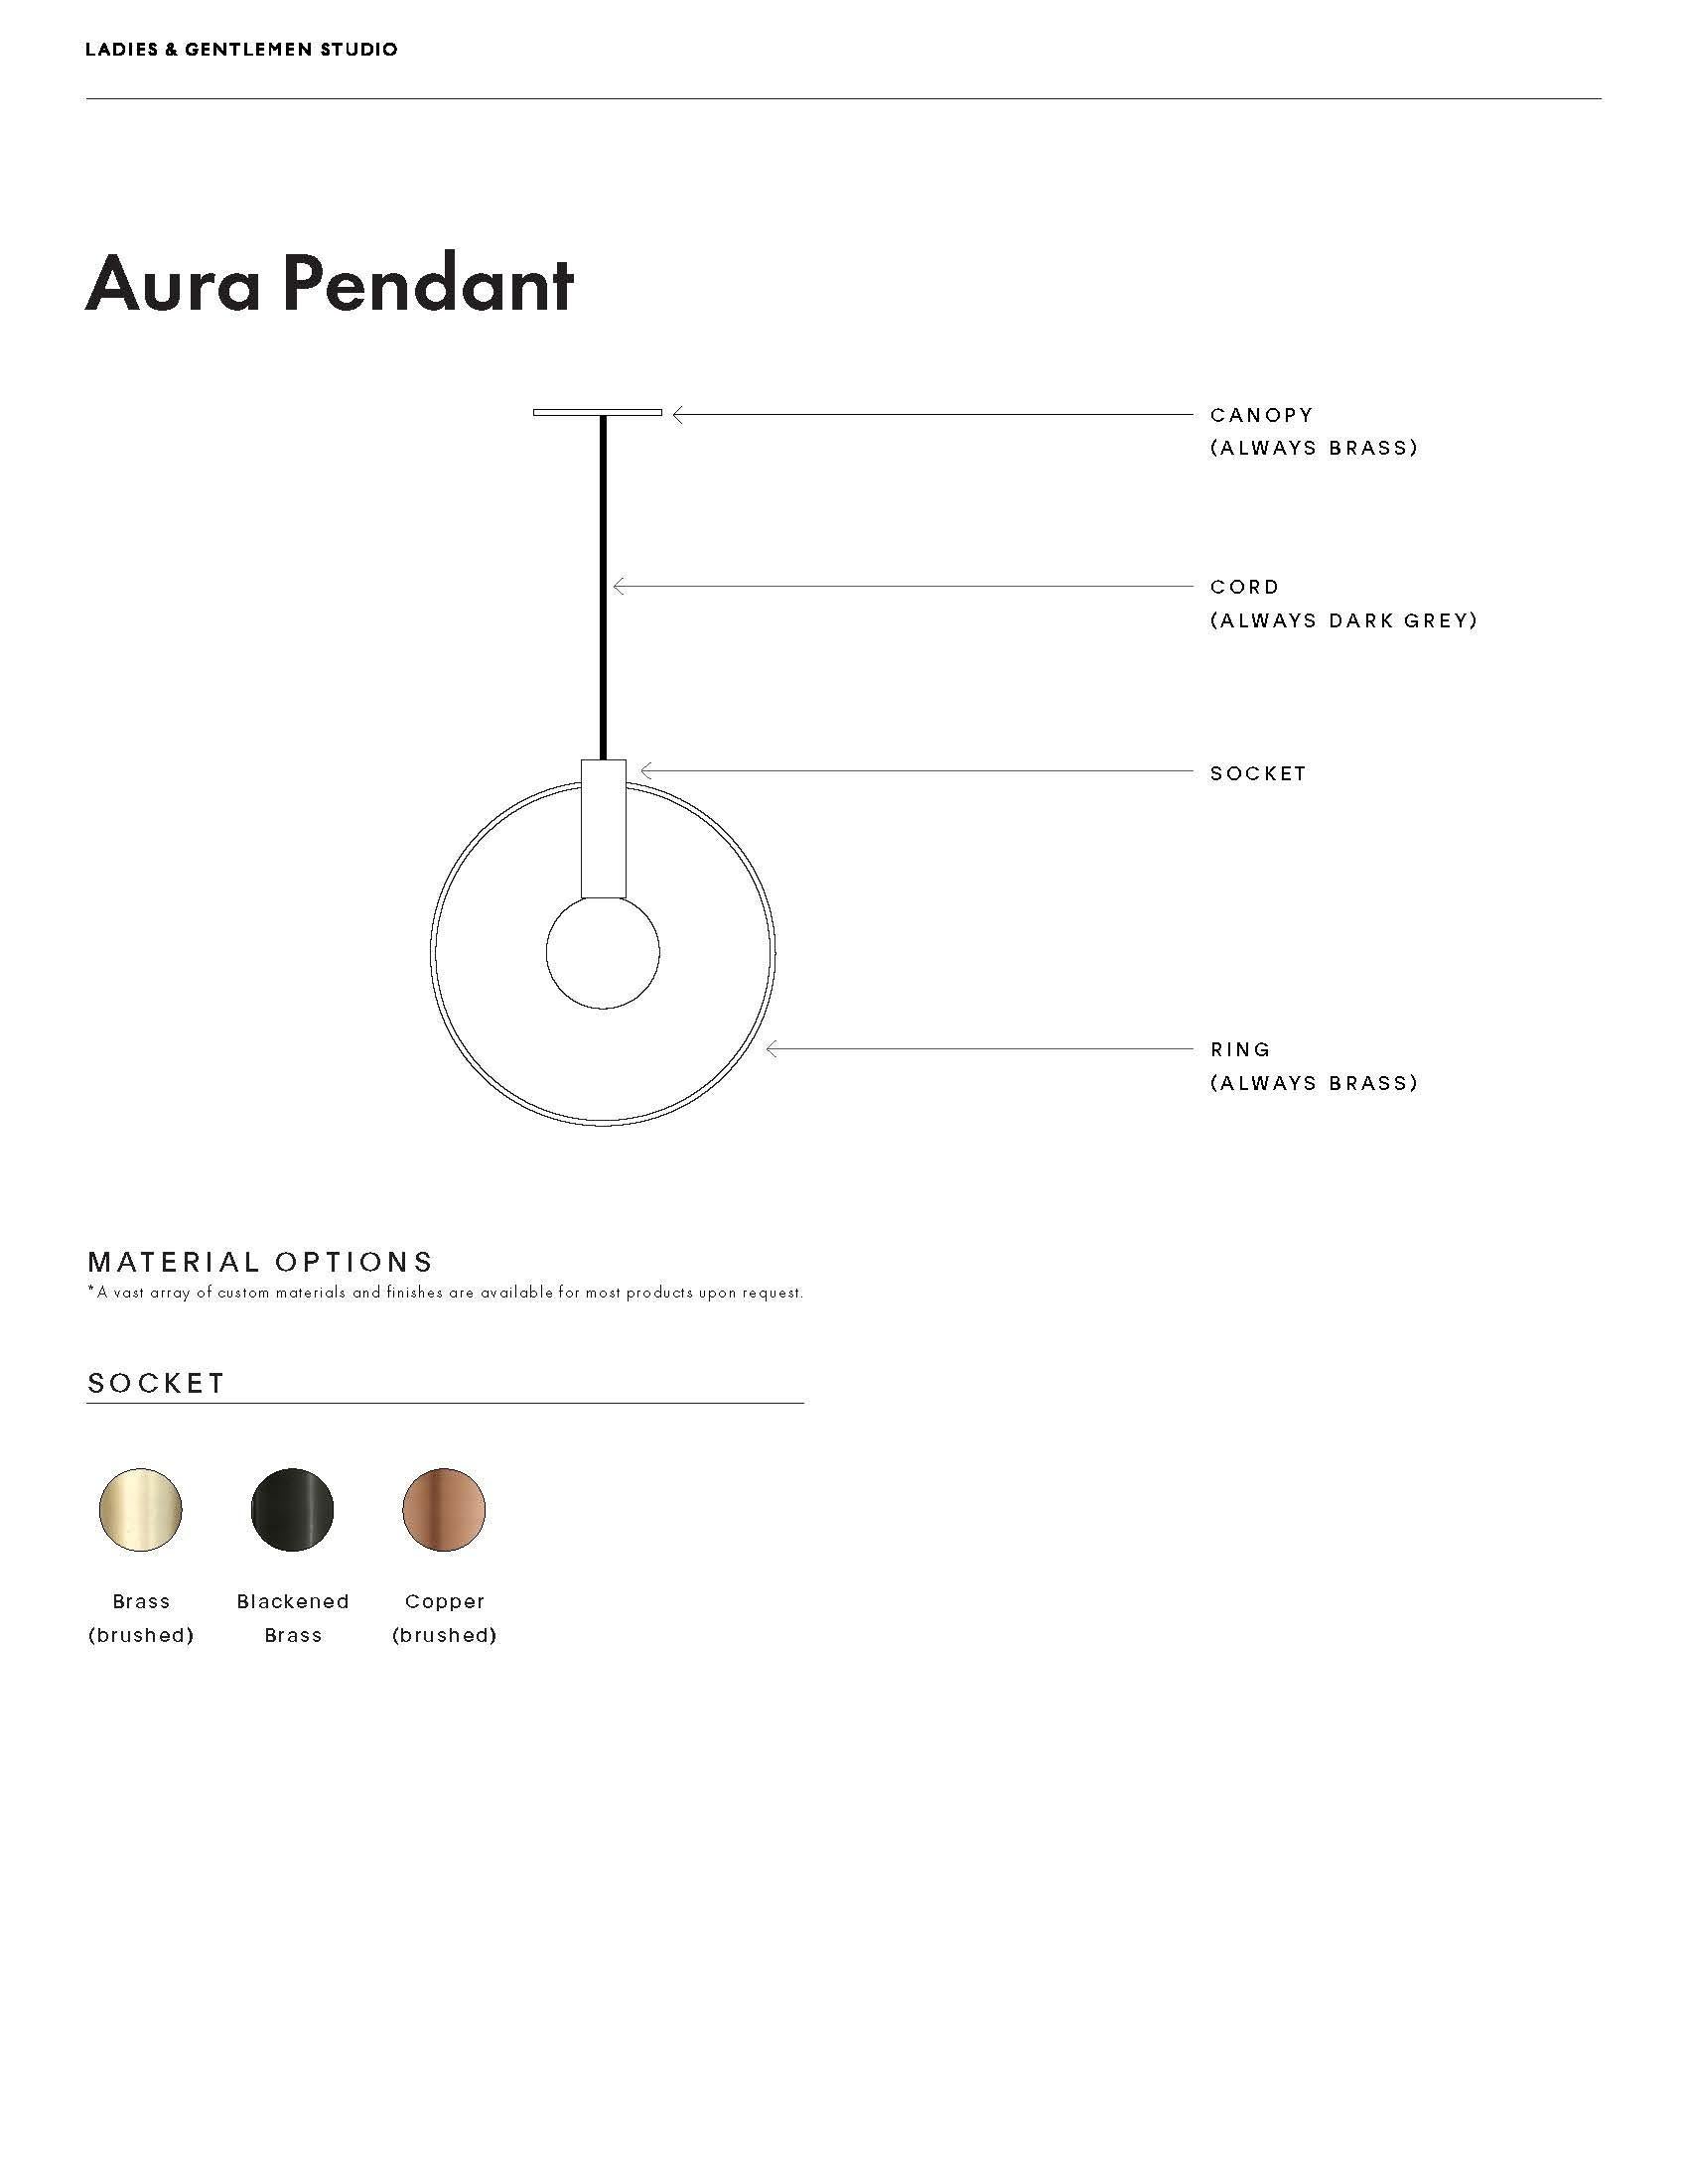 Aura Pendant Light - 10